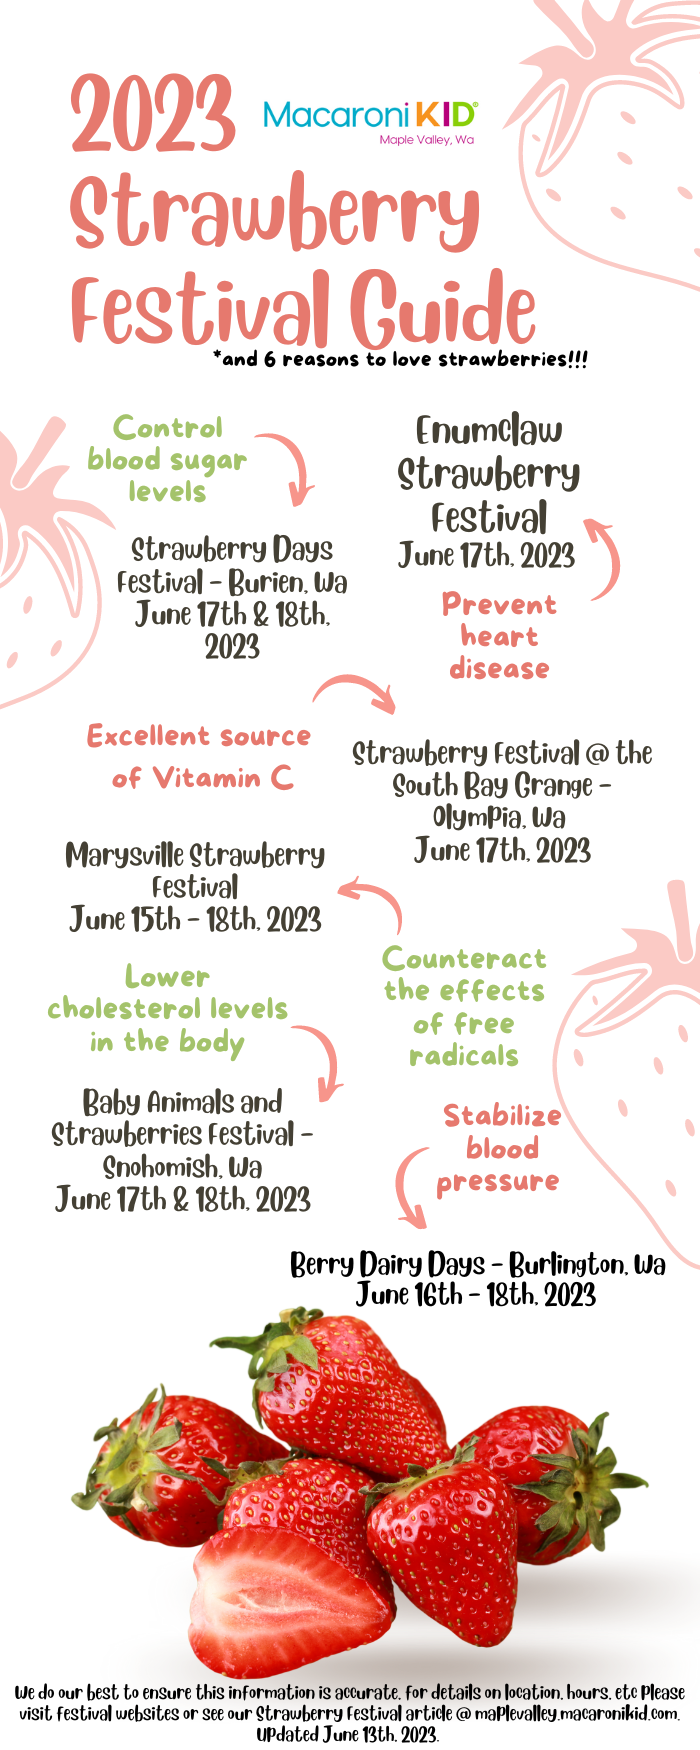 2023 Strawberry Festival Guide Macaroni KID Maple Valley